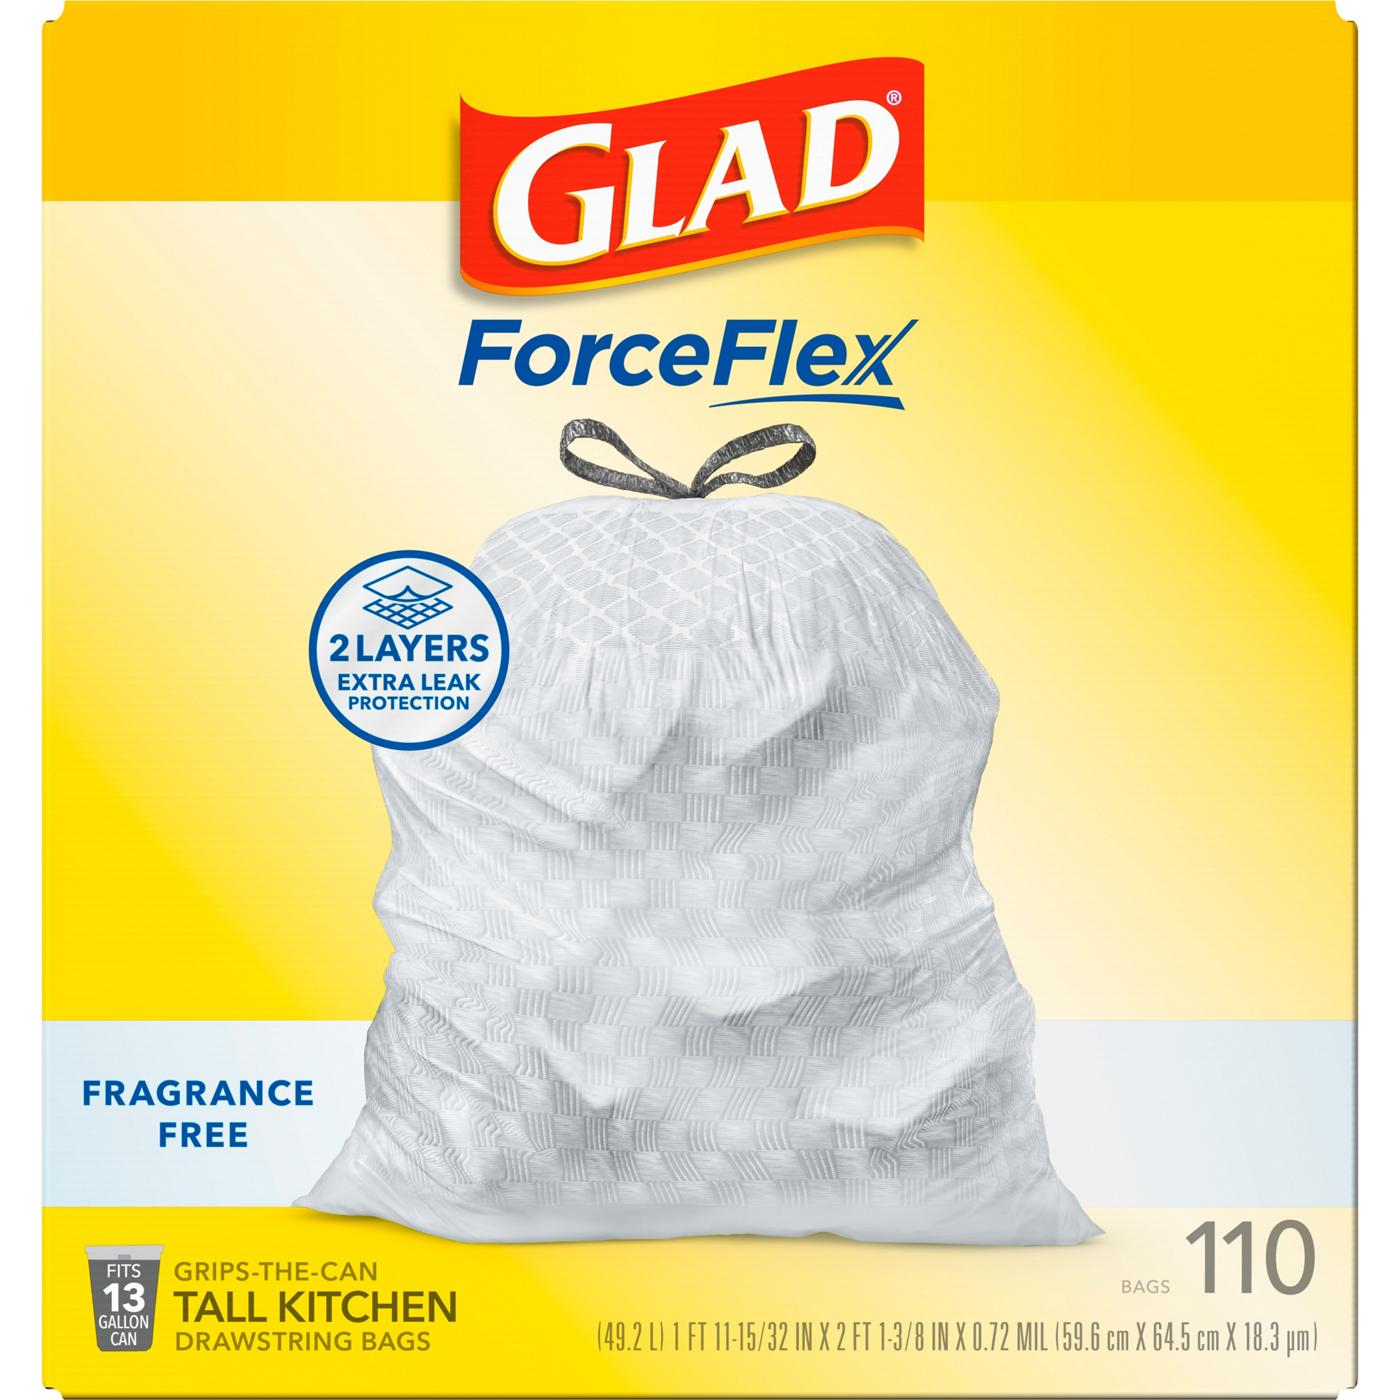 Glad ForceFlex Fragrance Free Tall Kitchen Drawstring Trash Bags - 13 Gallon; image 1 of 3